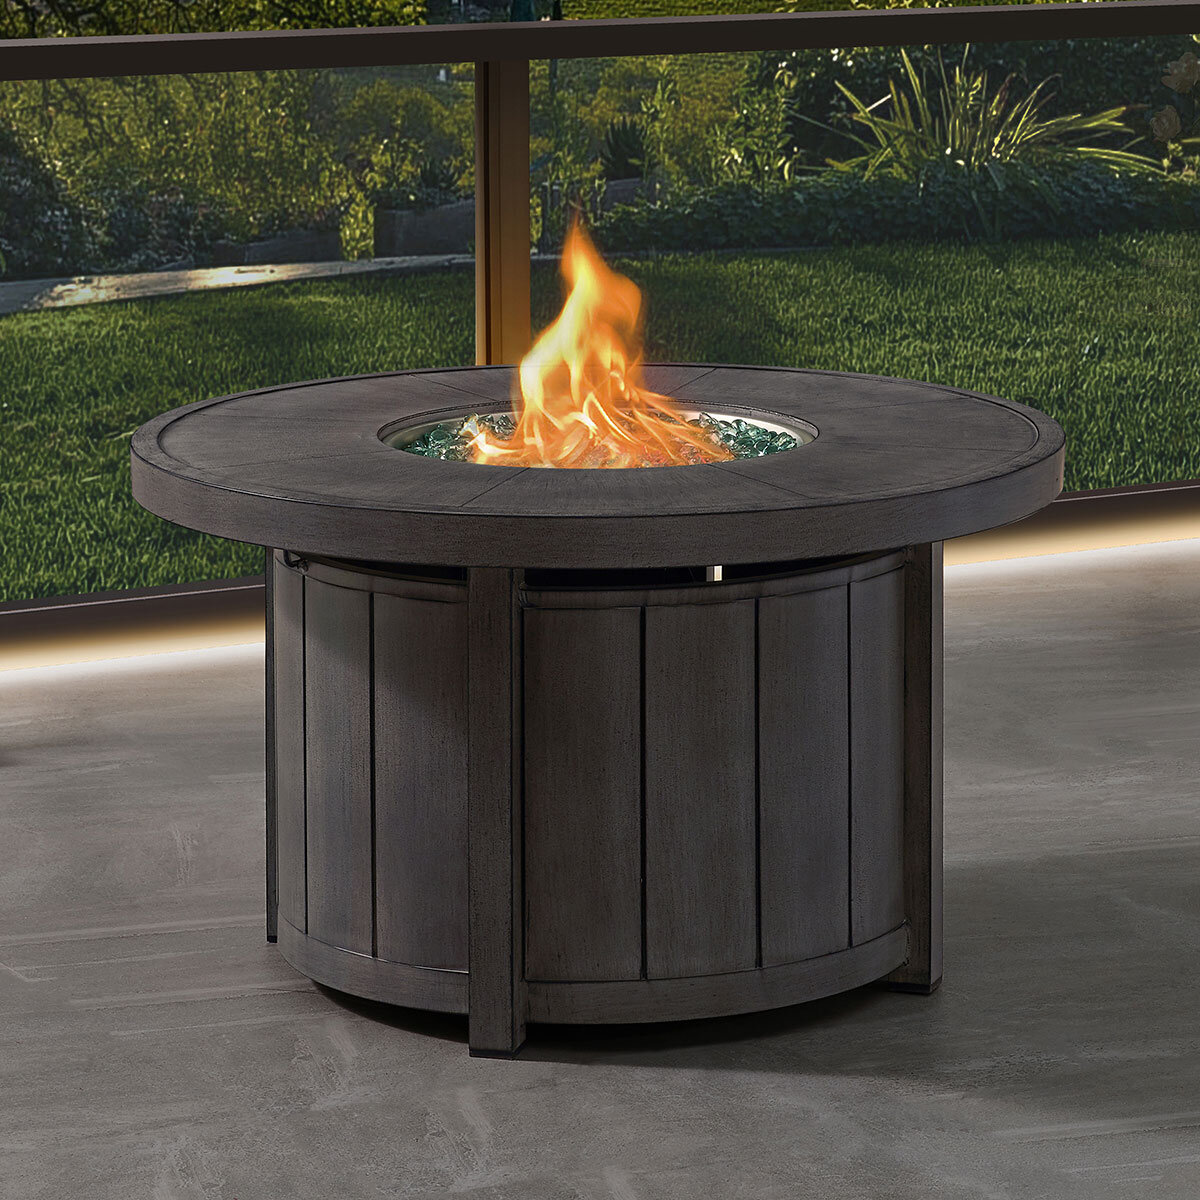 OVE Decors Belleview 42" (107 cm) Fire Table 